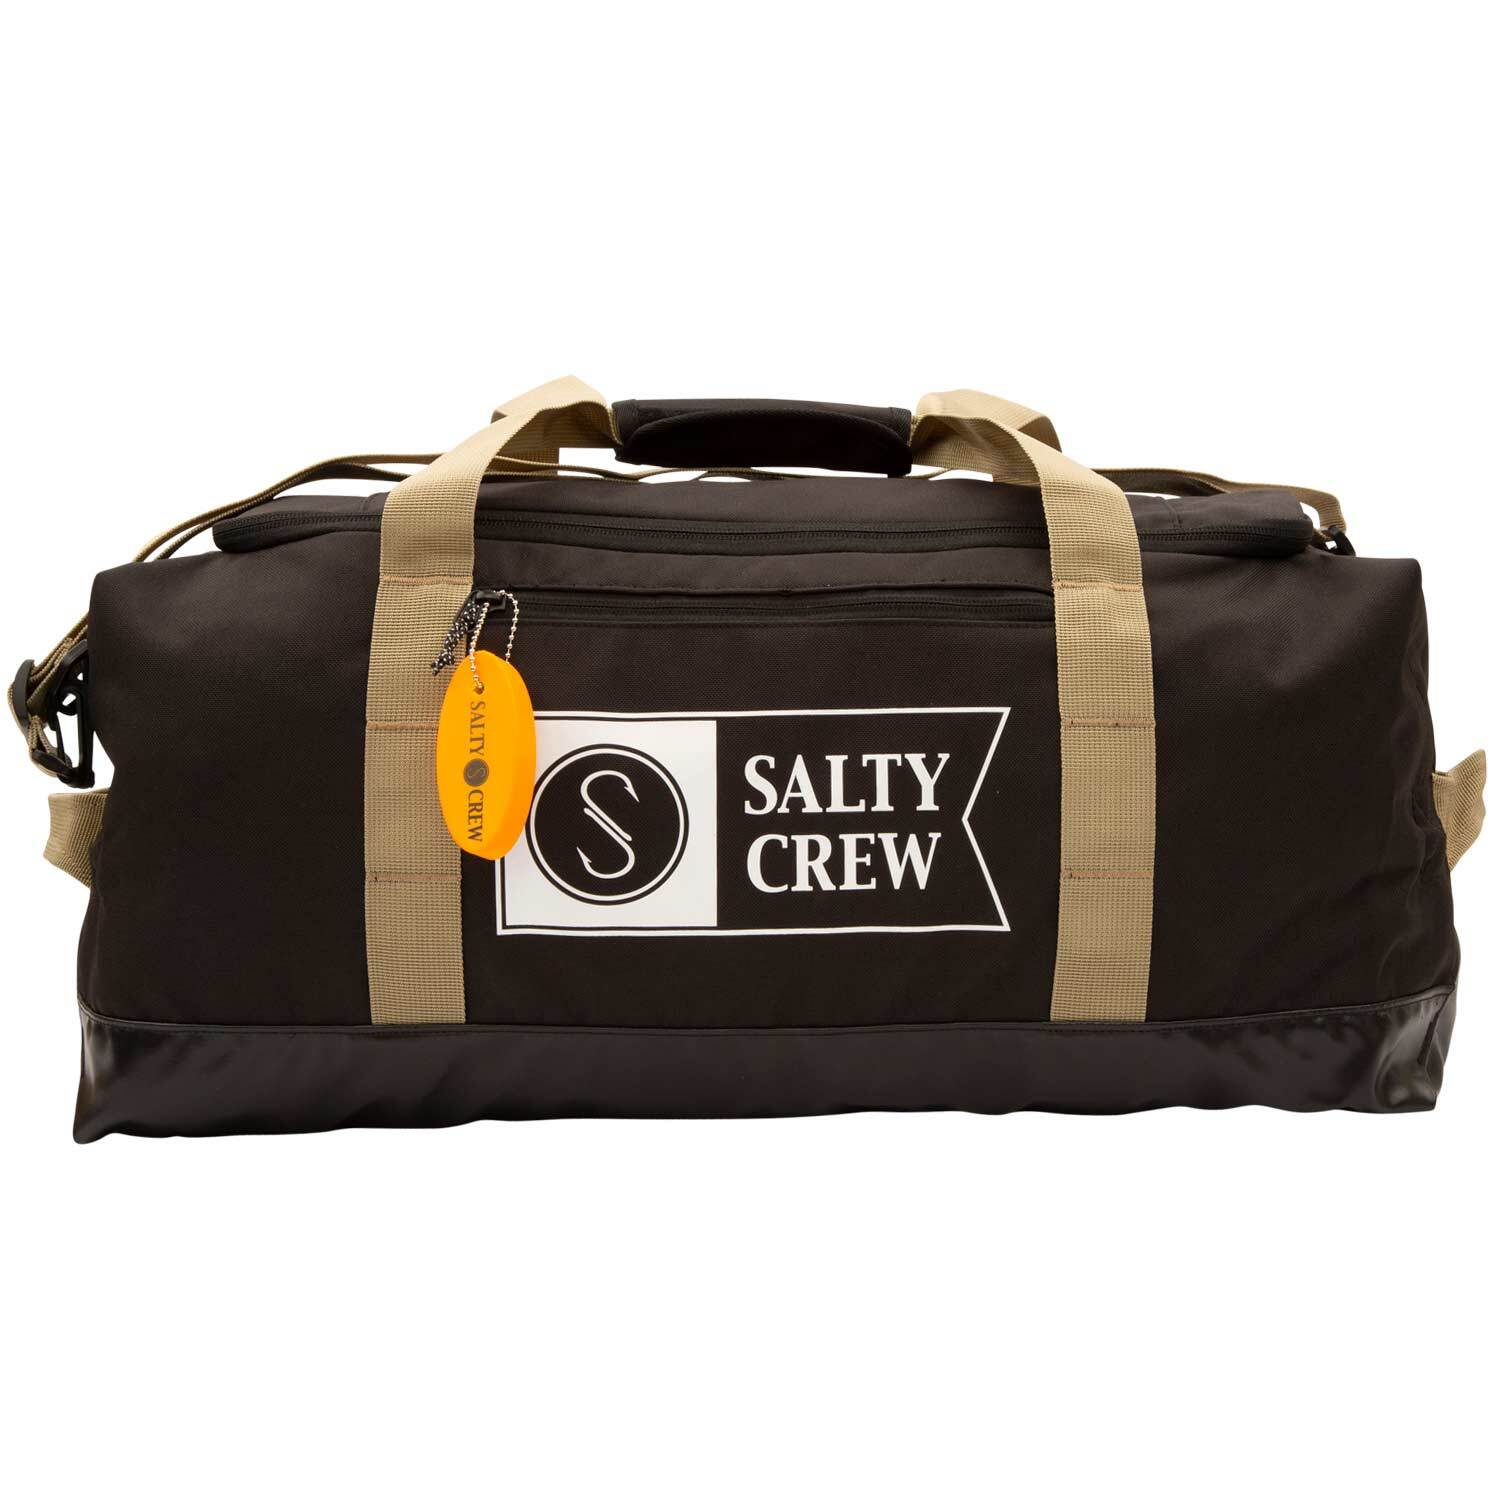 SALTY CREW 40L Offshore Duffel Bag